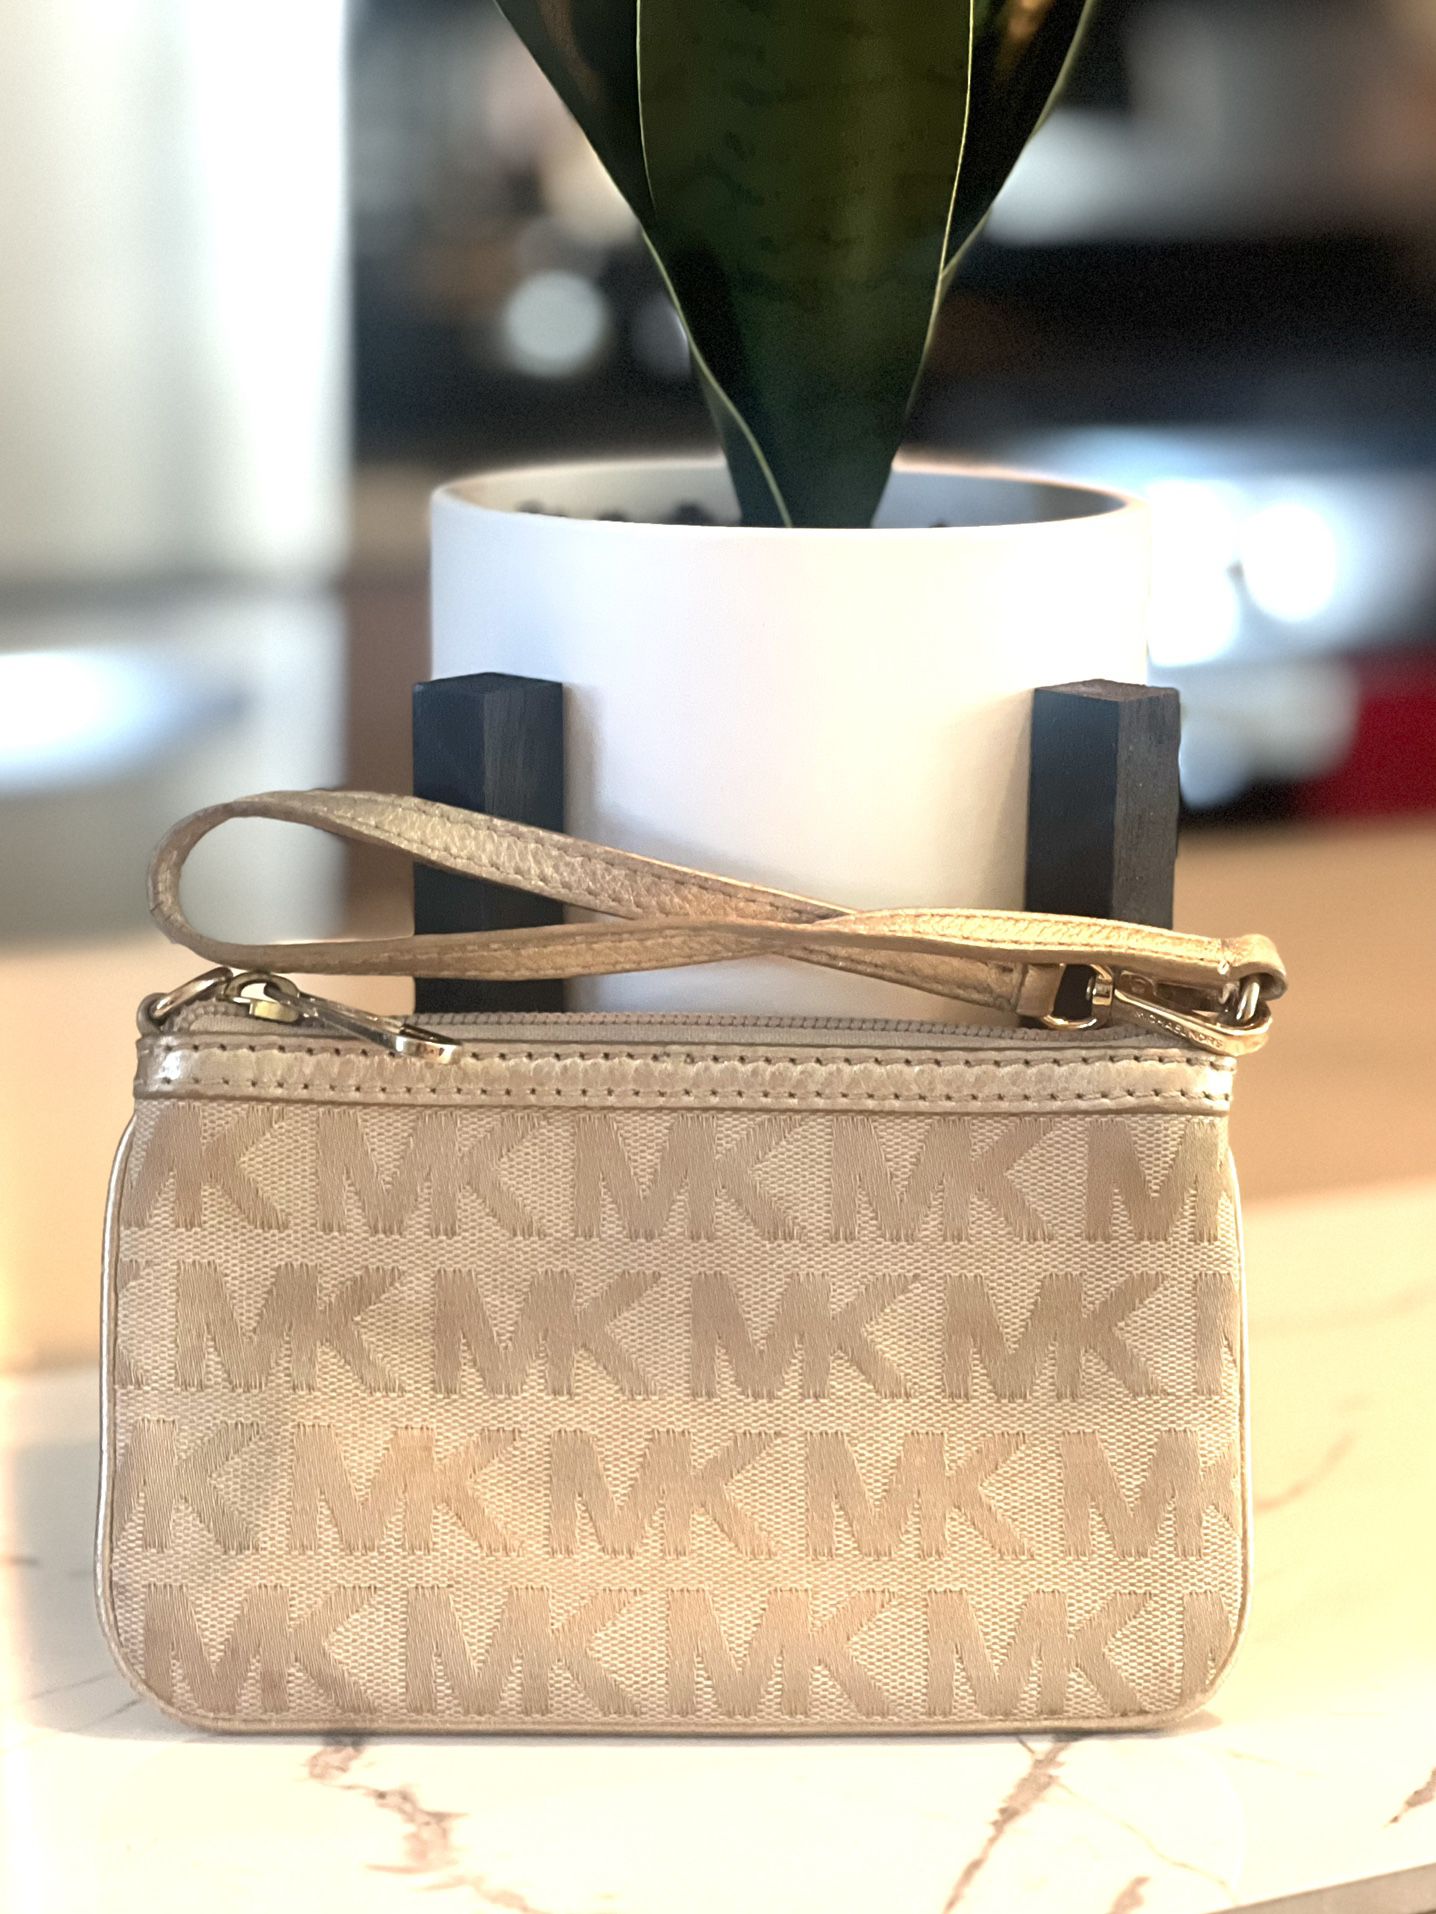 MK Small Wallet$5